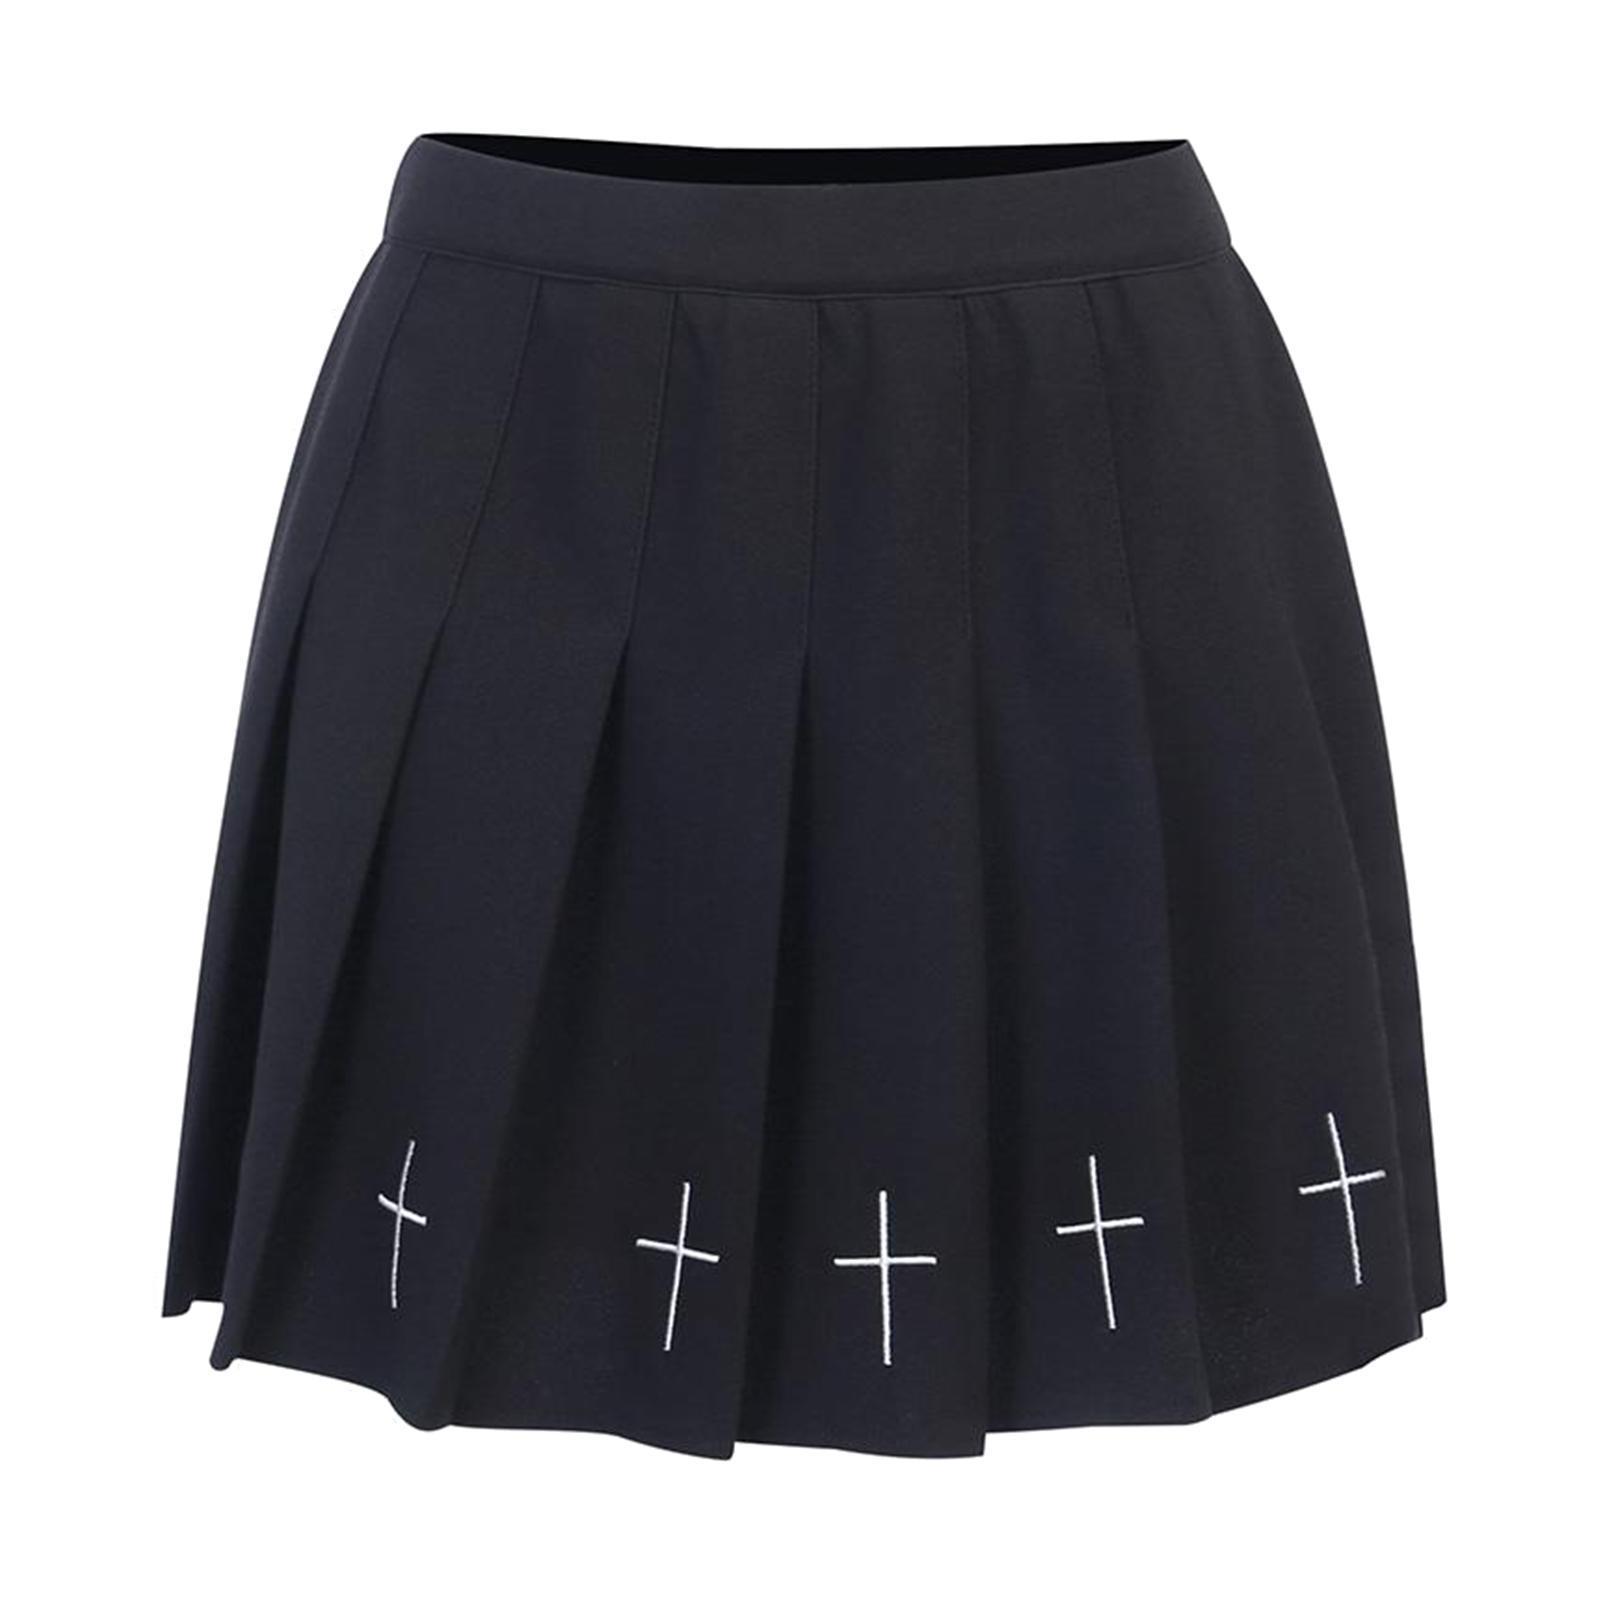 Black Women Mini Skirt Pleated Rock Gothic Lolita Casual School Dress